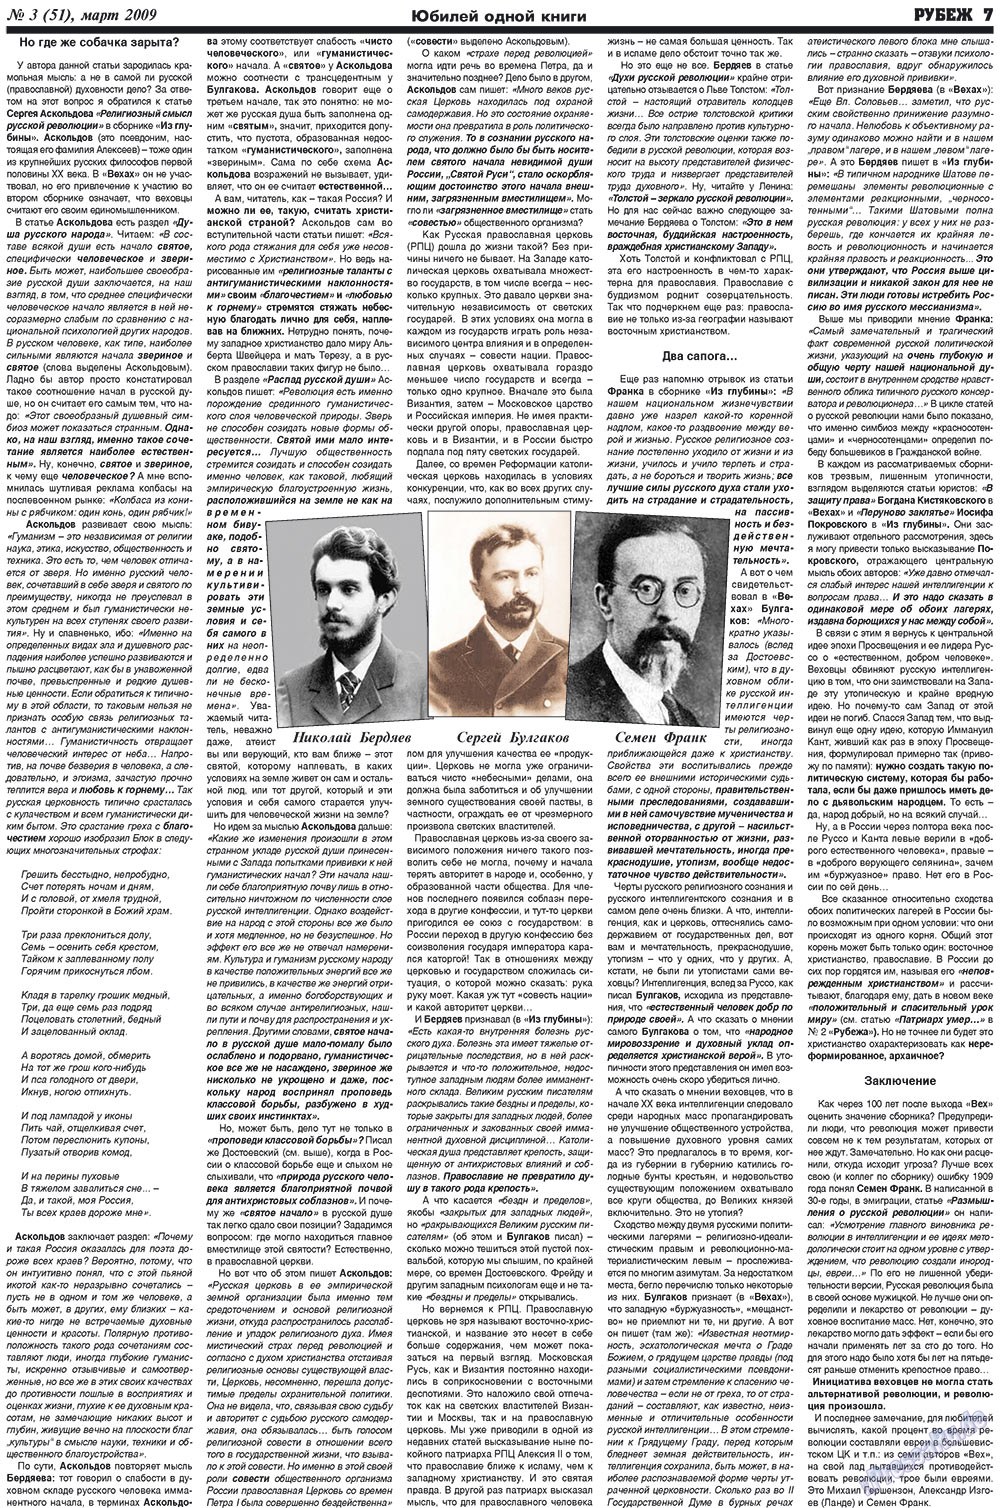 Рубеж, газета. 2009 №3 стр.7